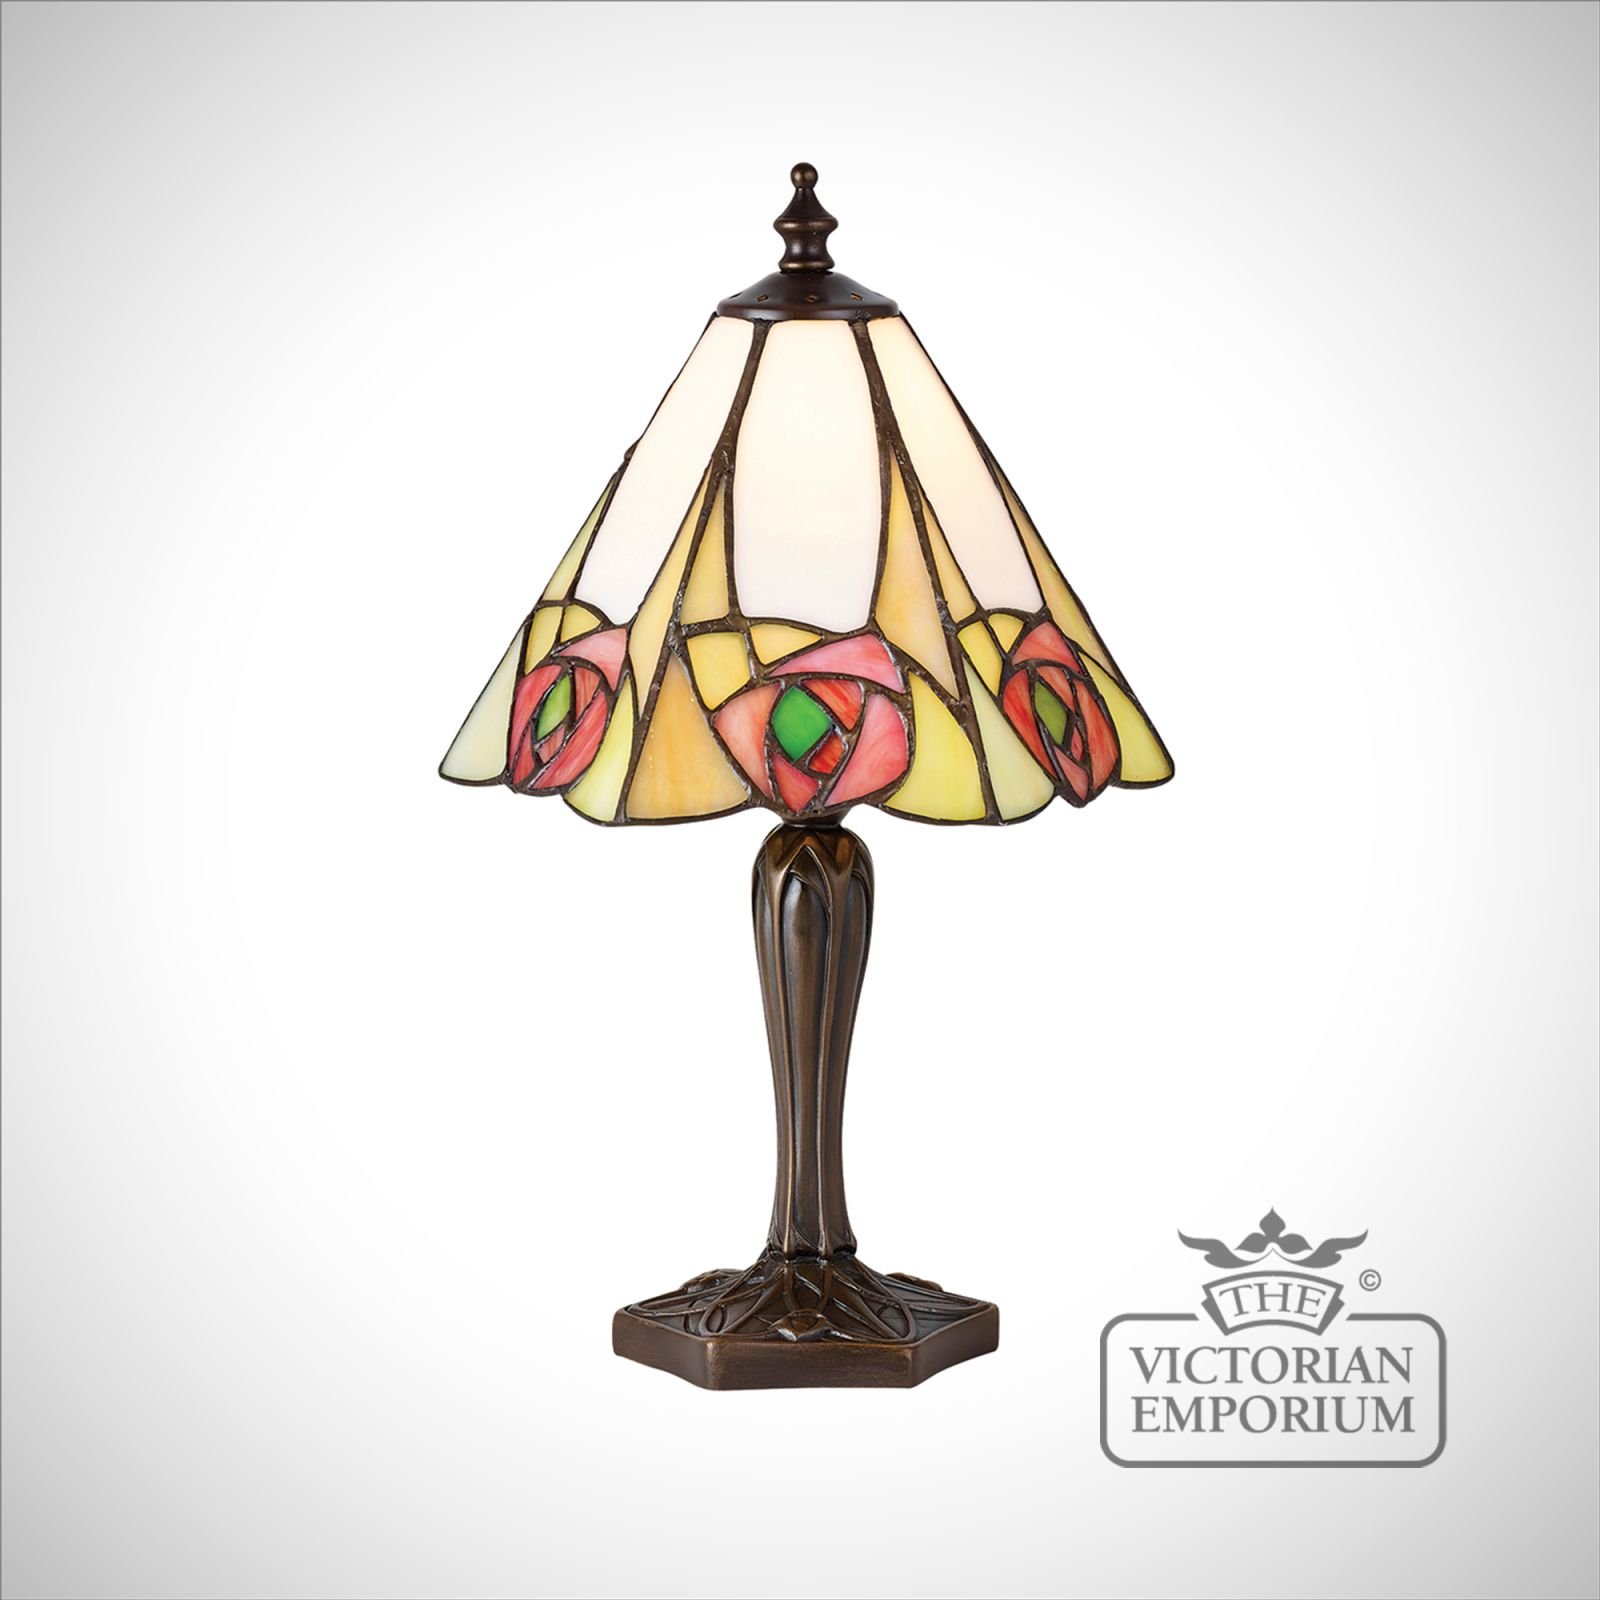 Ingram table lamp - small or medium